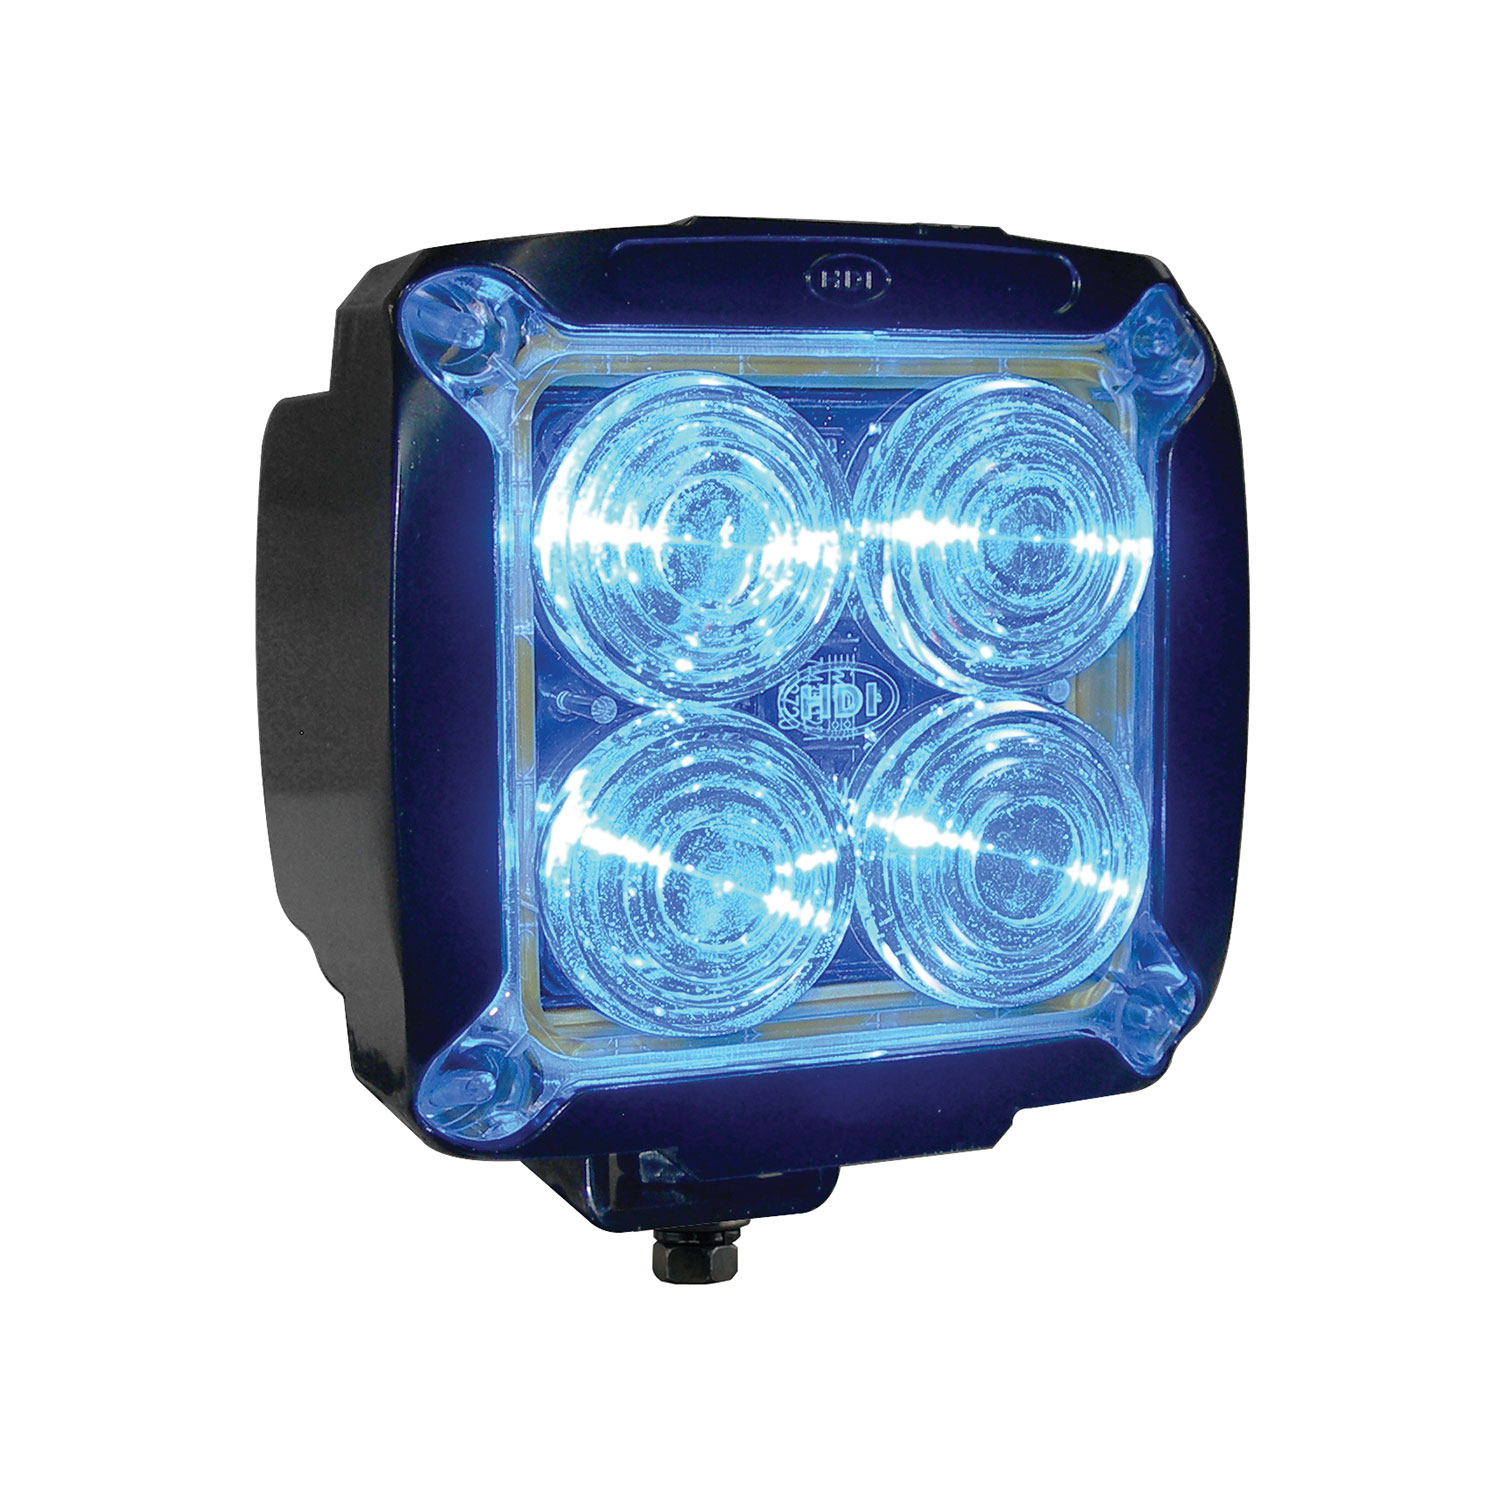 XWL-812 Blue LED Safety Light - Hamsar - A Methode Electronics Company